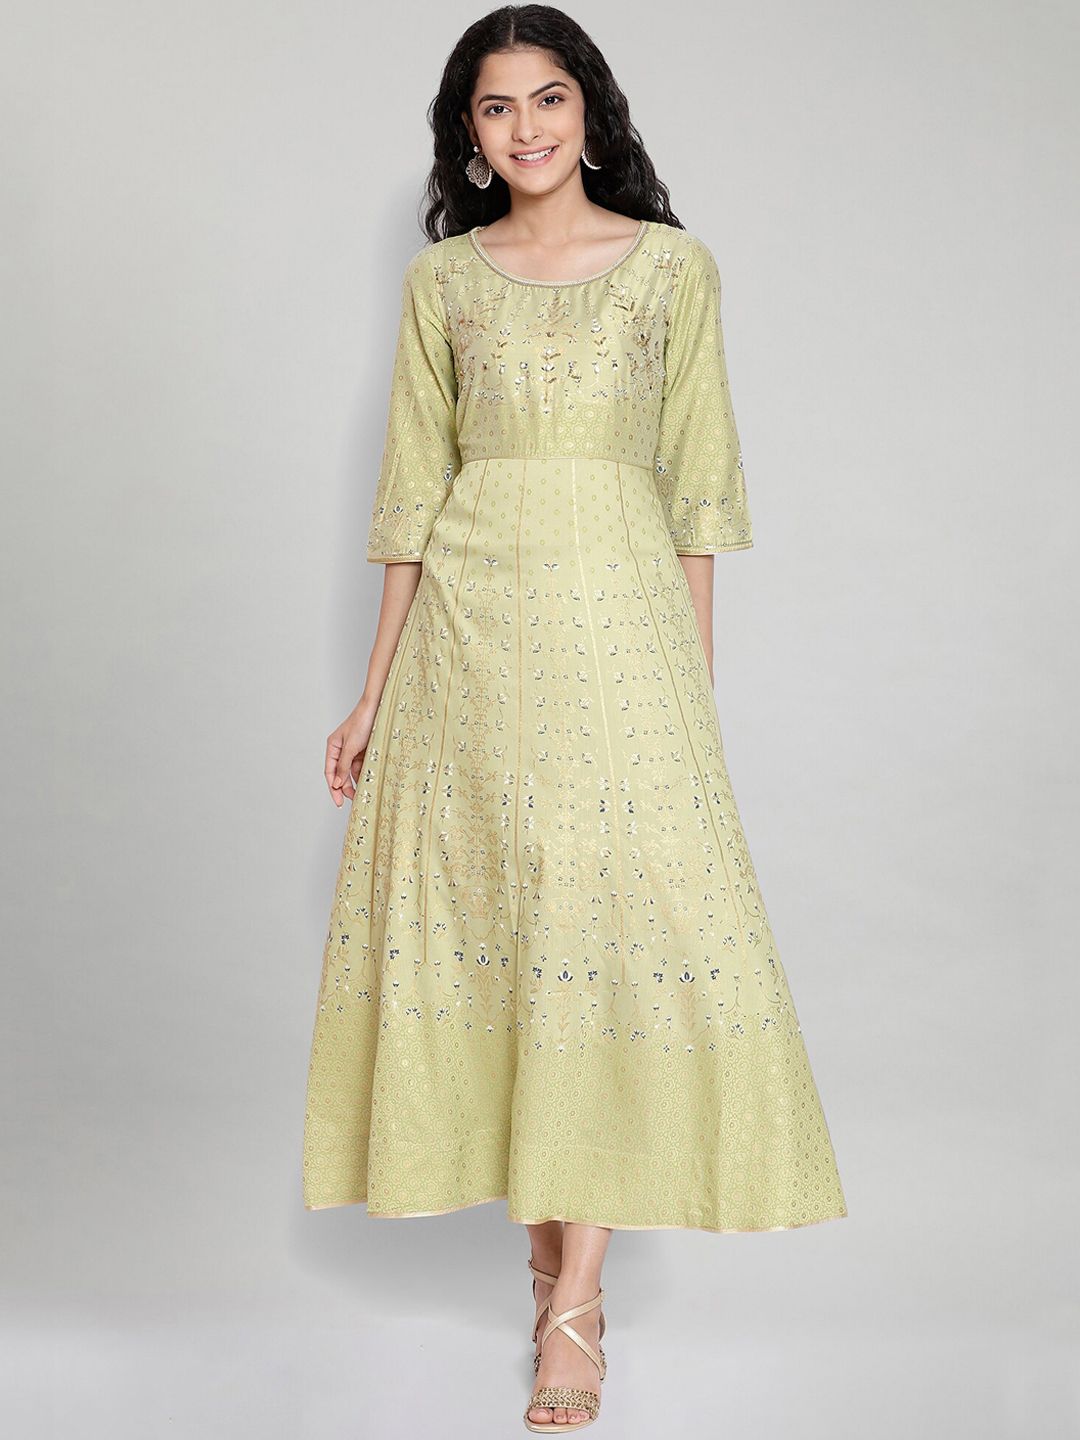 AURELIA Green Ethnic Motifs Printed Ethnic A-Line Maxi Dress Price in India